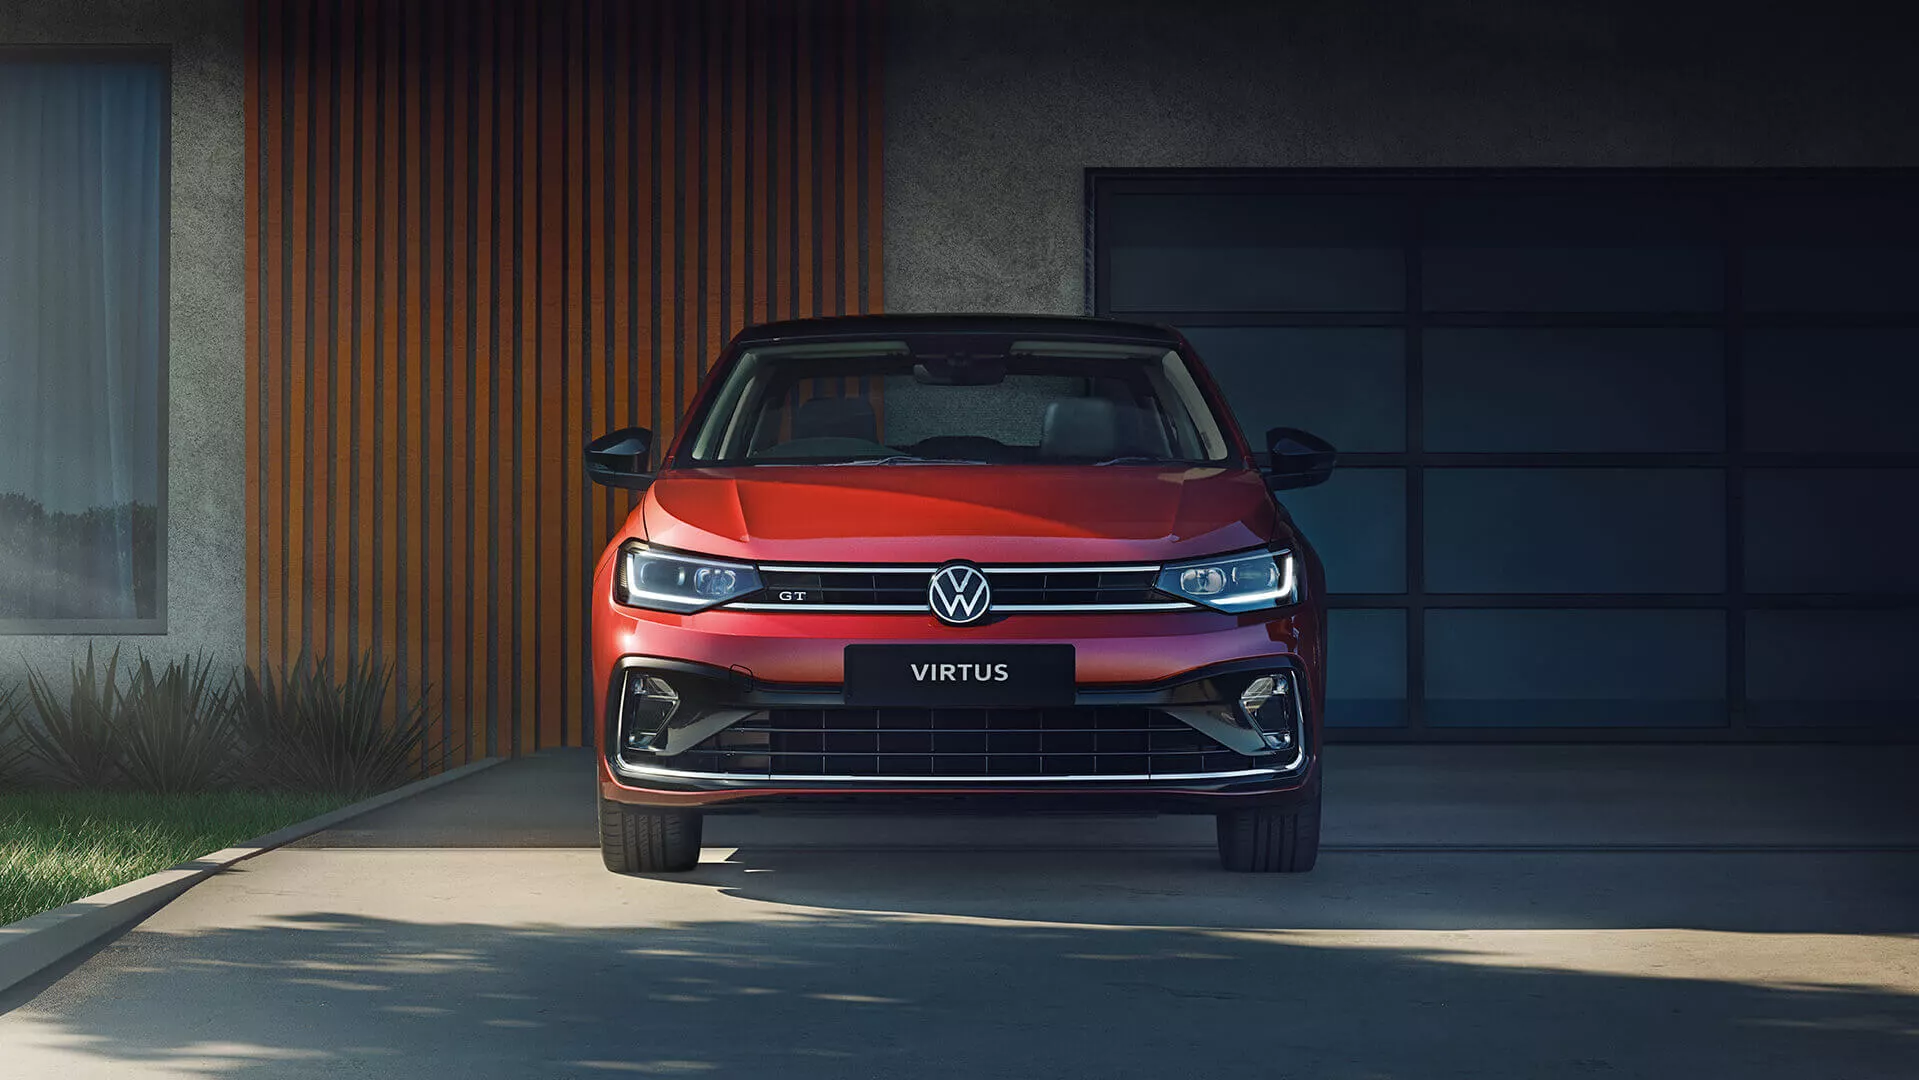 Volkswagen Virtus GT DSG variant launched at Rs. 16.19 lakh